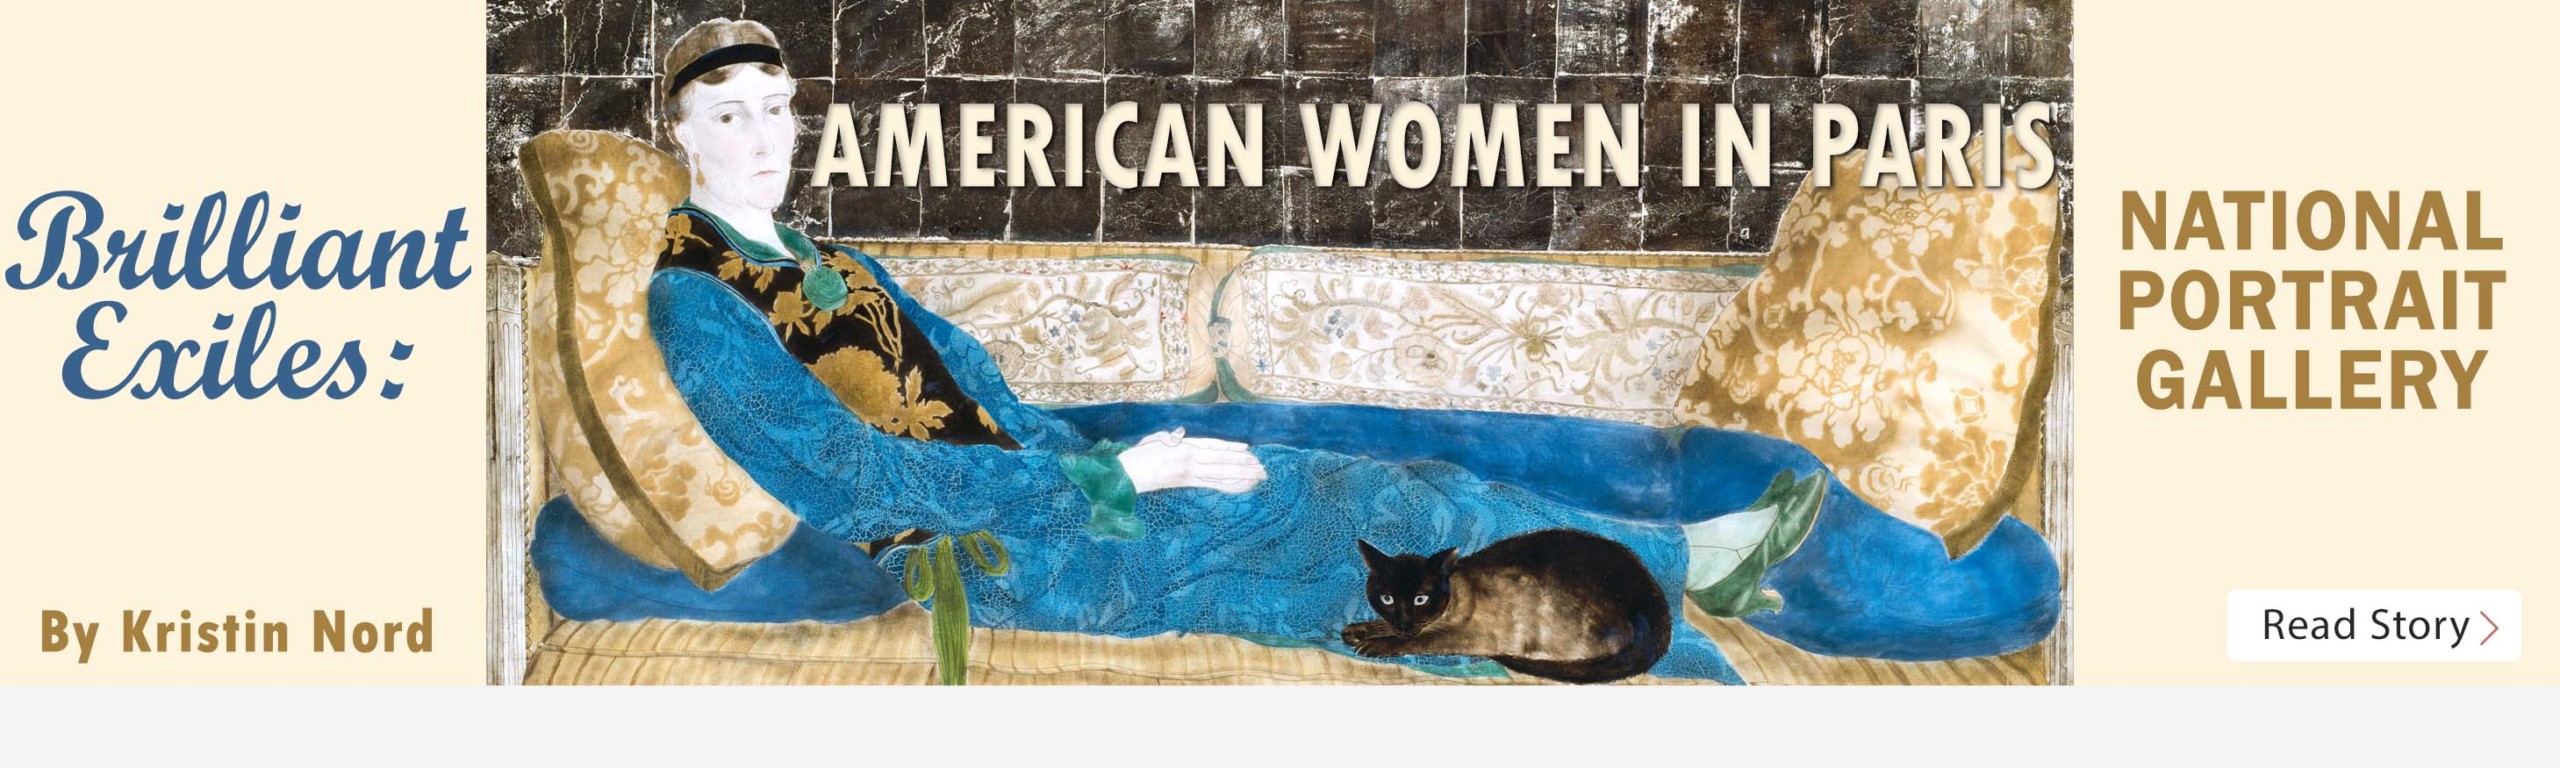 National Portrait Gallery—Brilliant Exiles: American Women In Paris